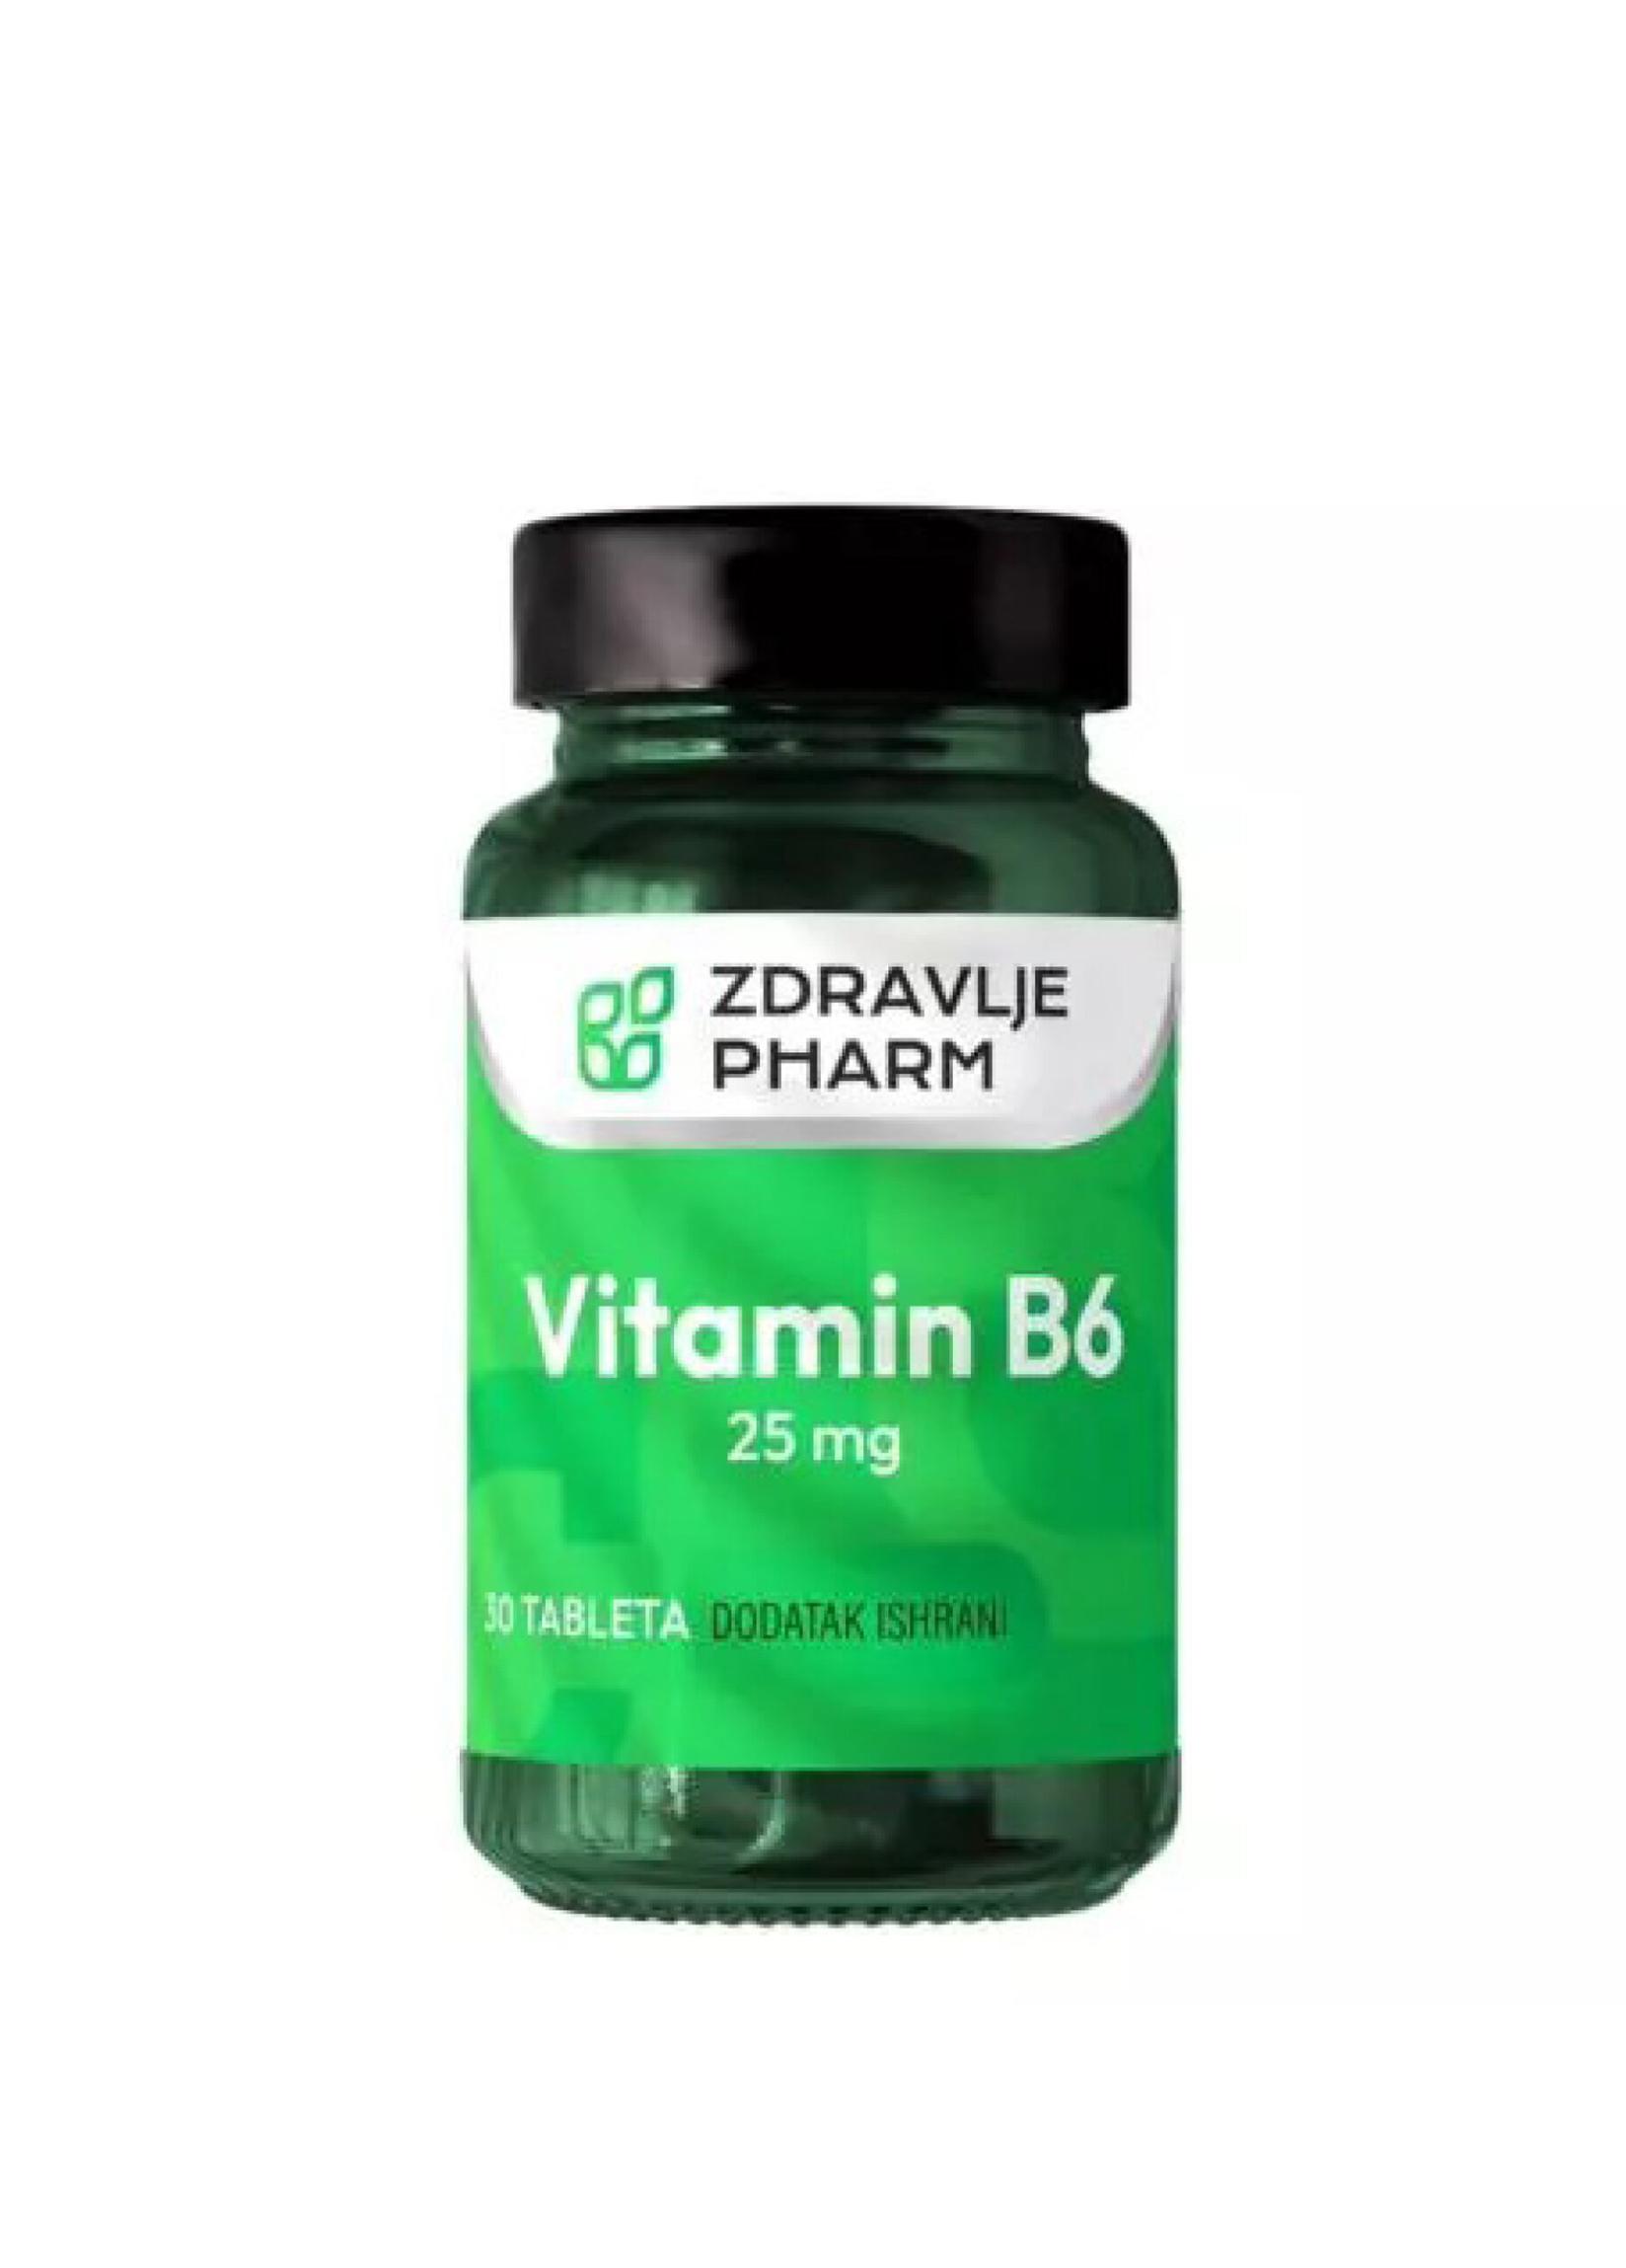 ZDRAVLJE PHARM Vitamin B6, 25mg